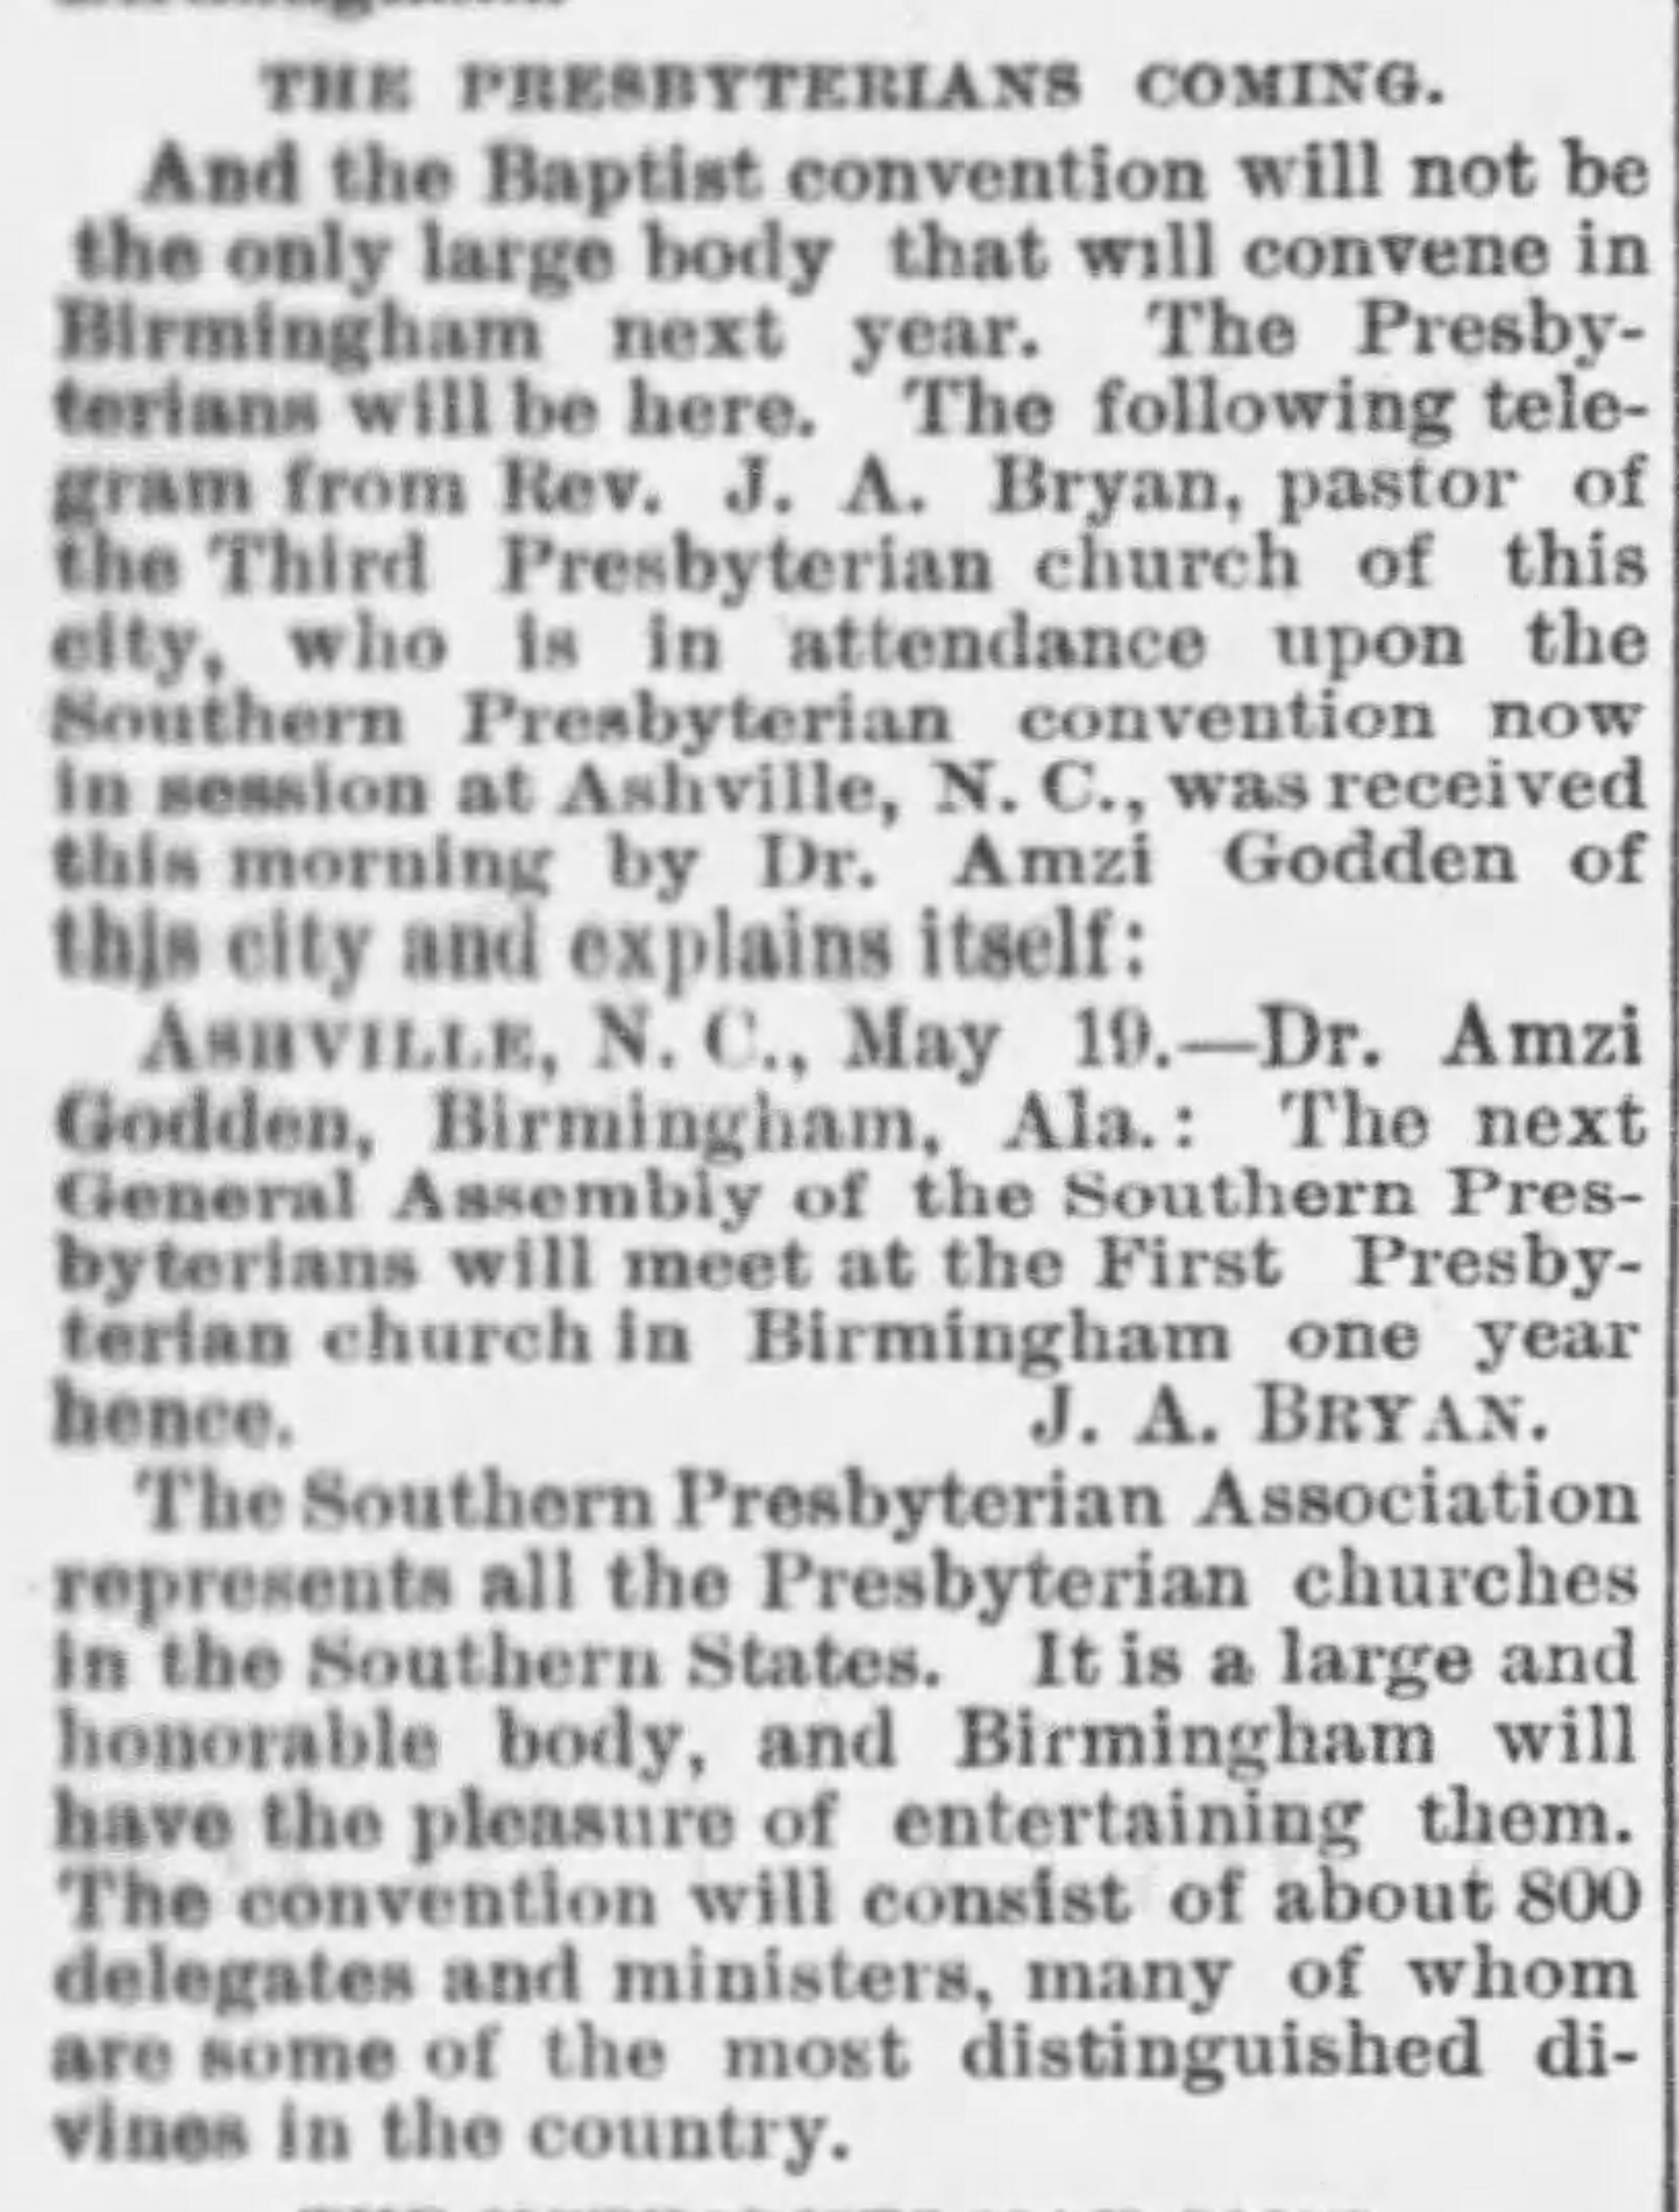 Presbyterians Coming